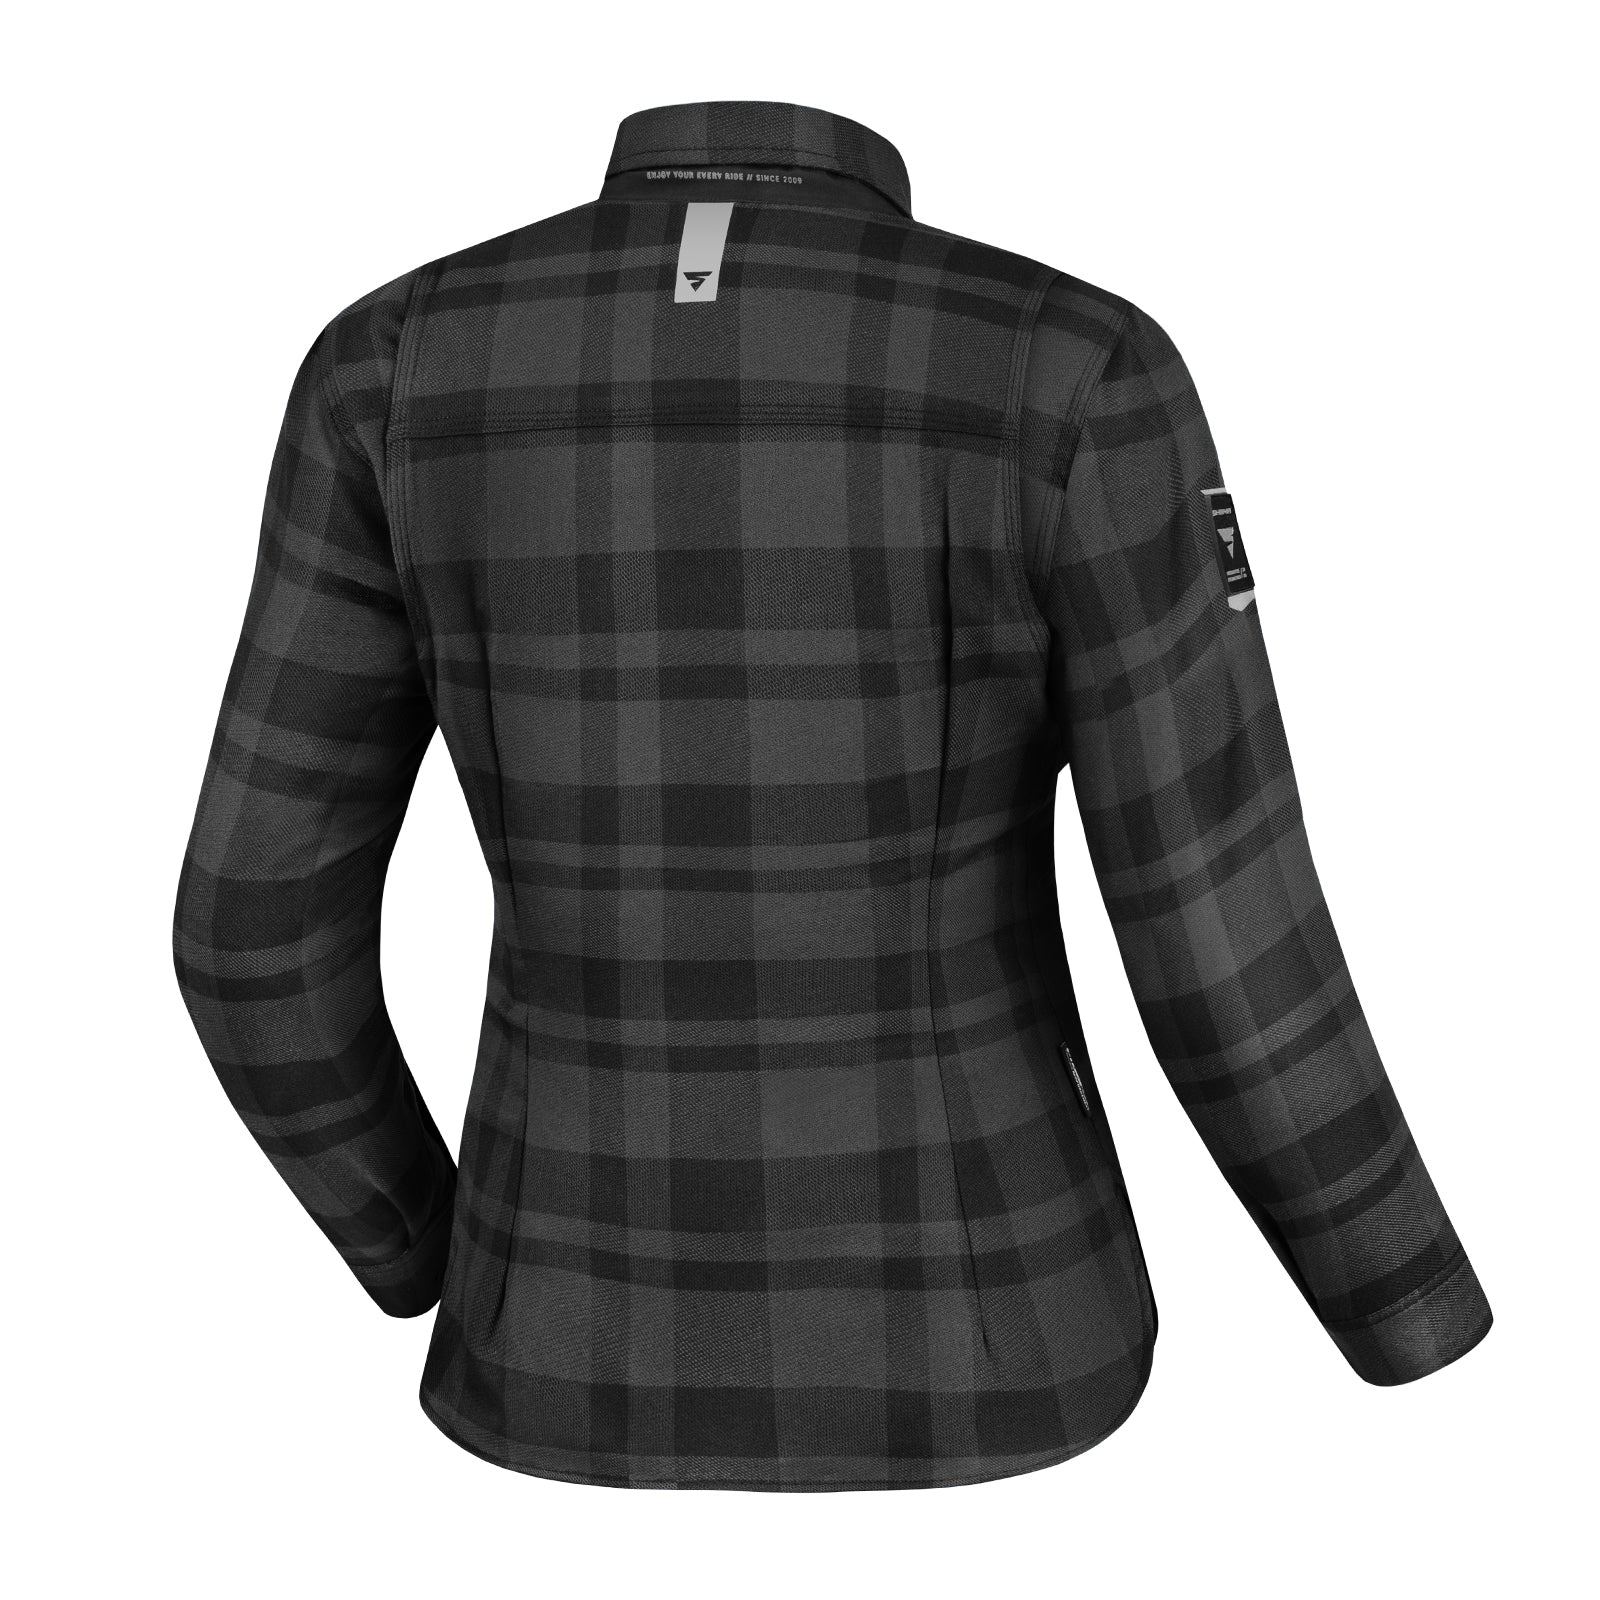 Black and grey lumberjack style women&#39;s motorcycle shirt from Shima 